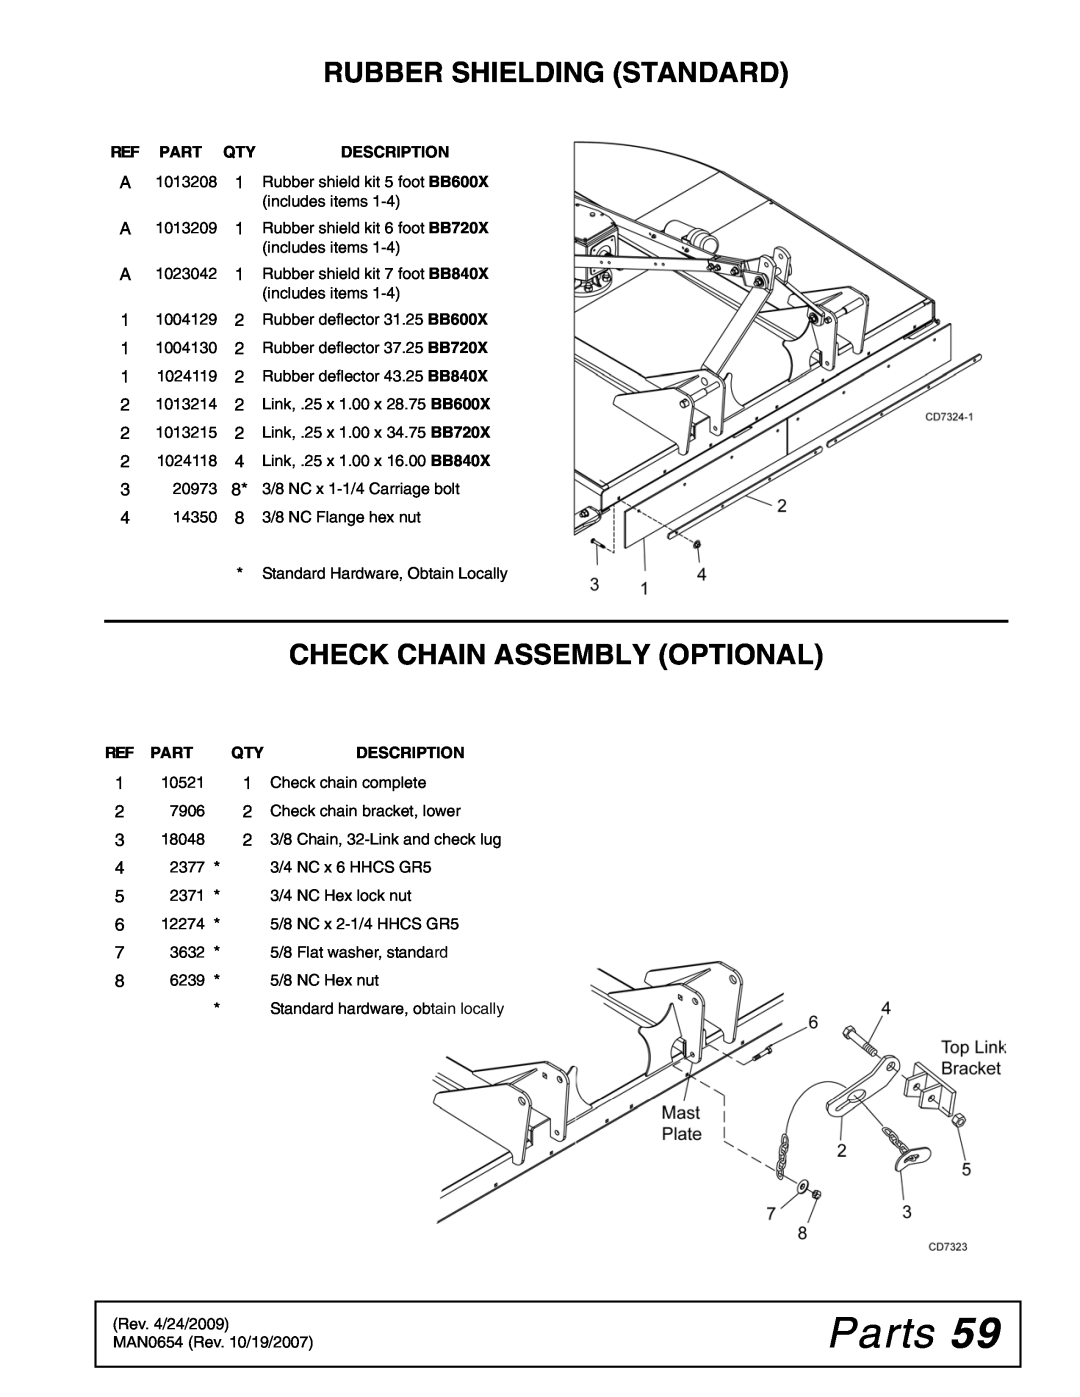 Woods Equipment BB720X, BB600X, BB840XP Rubber Shielding Standard, Check Chain Assembly Optional, Parts, Description 